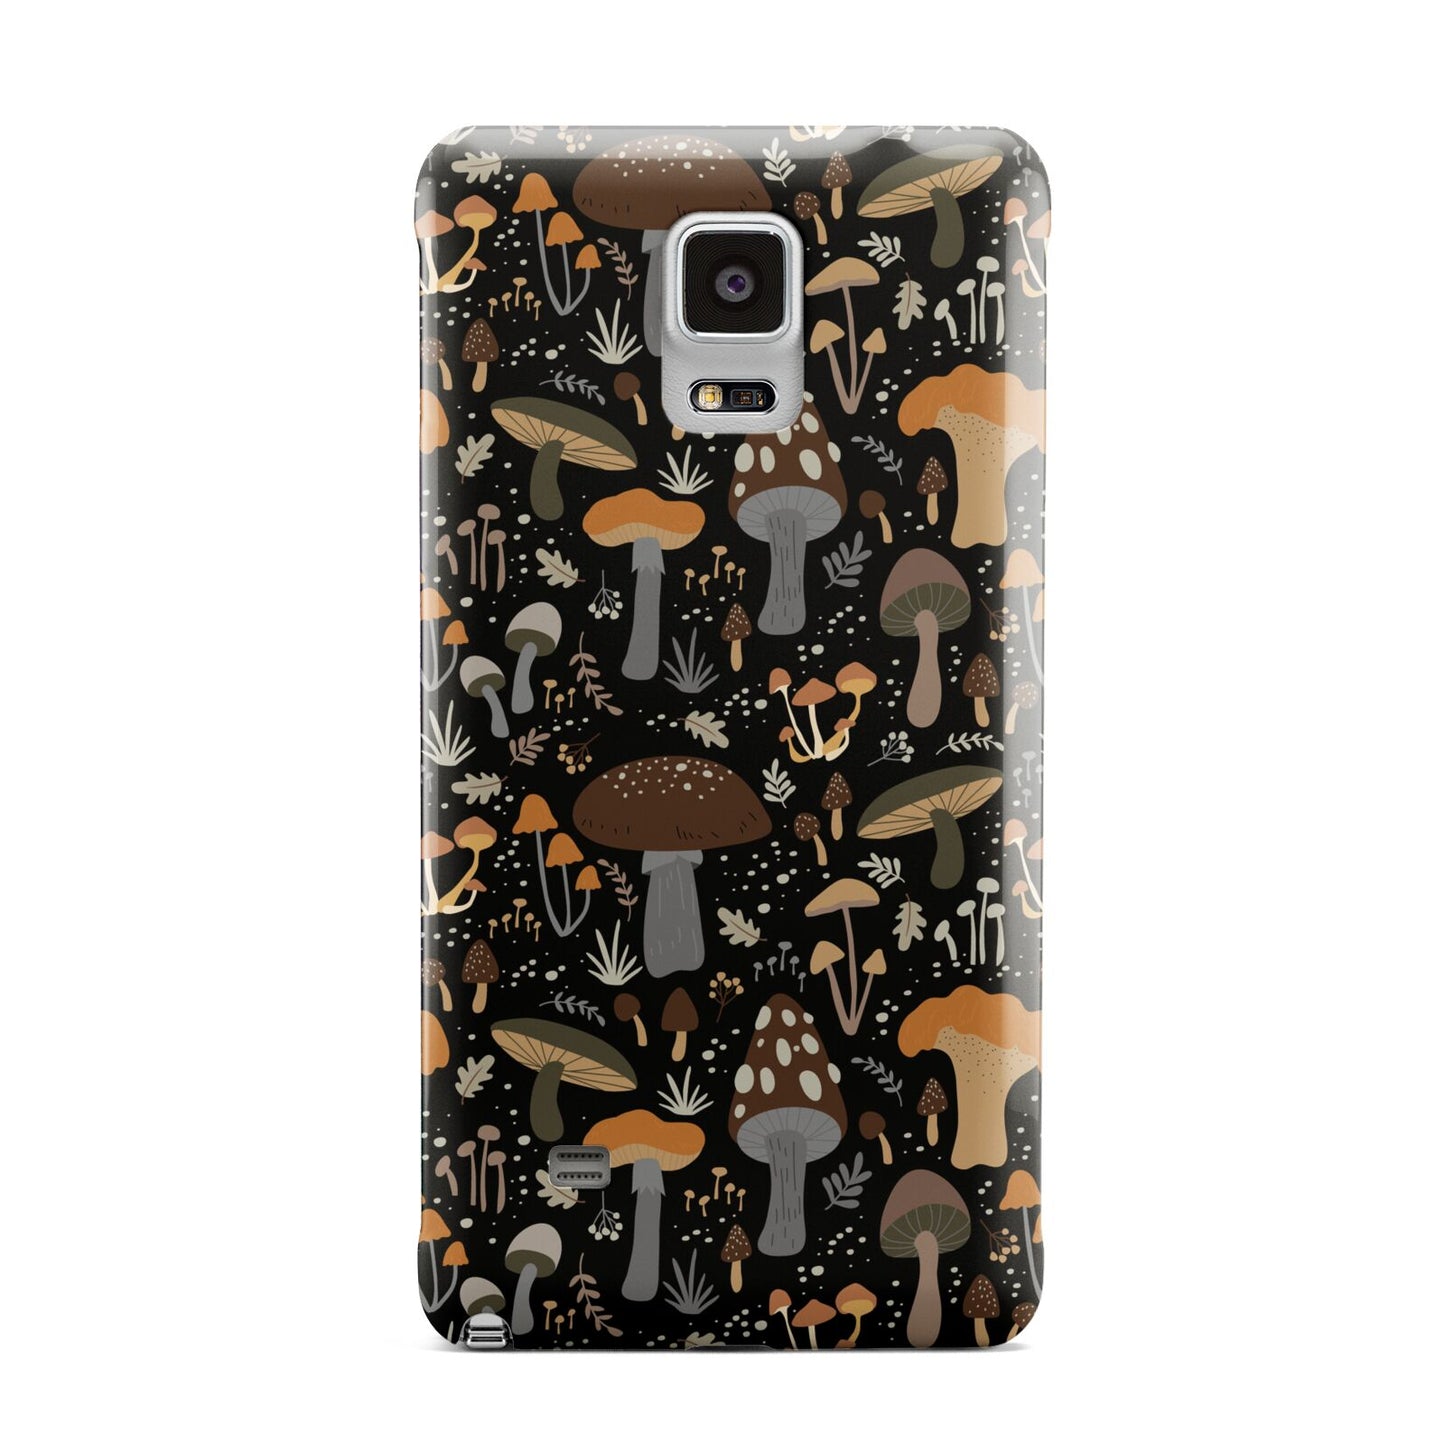 Mushroom Samsung Galaxy Note 4 Case